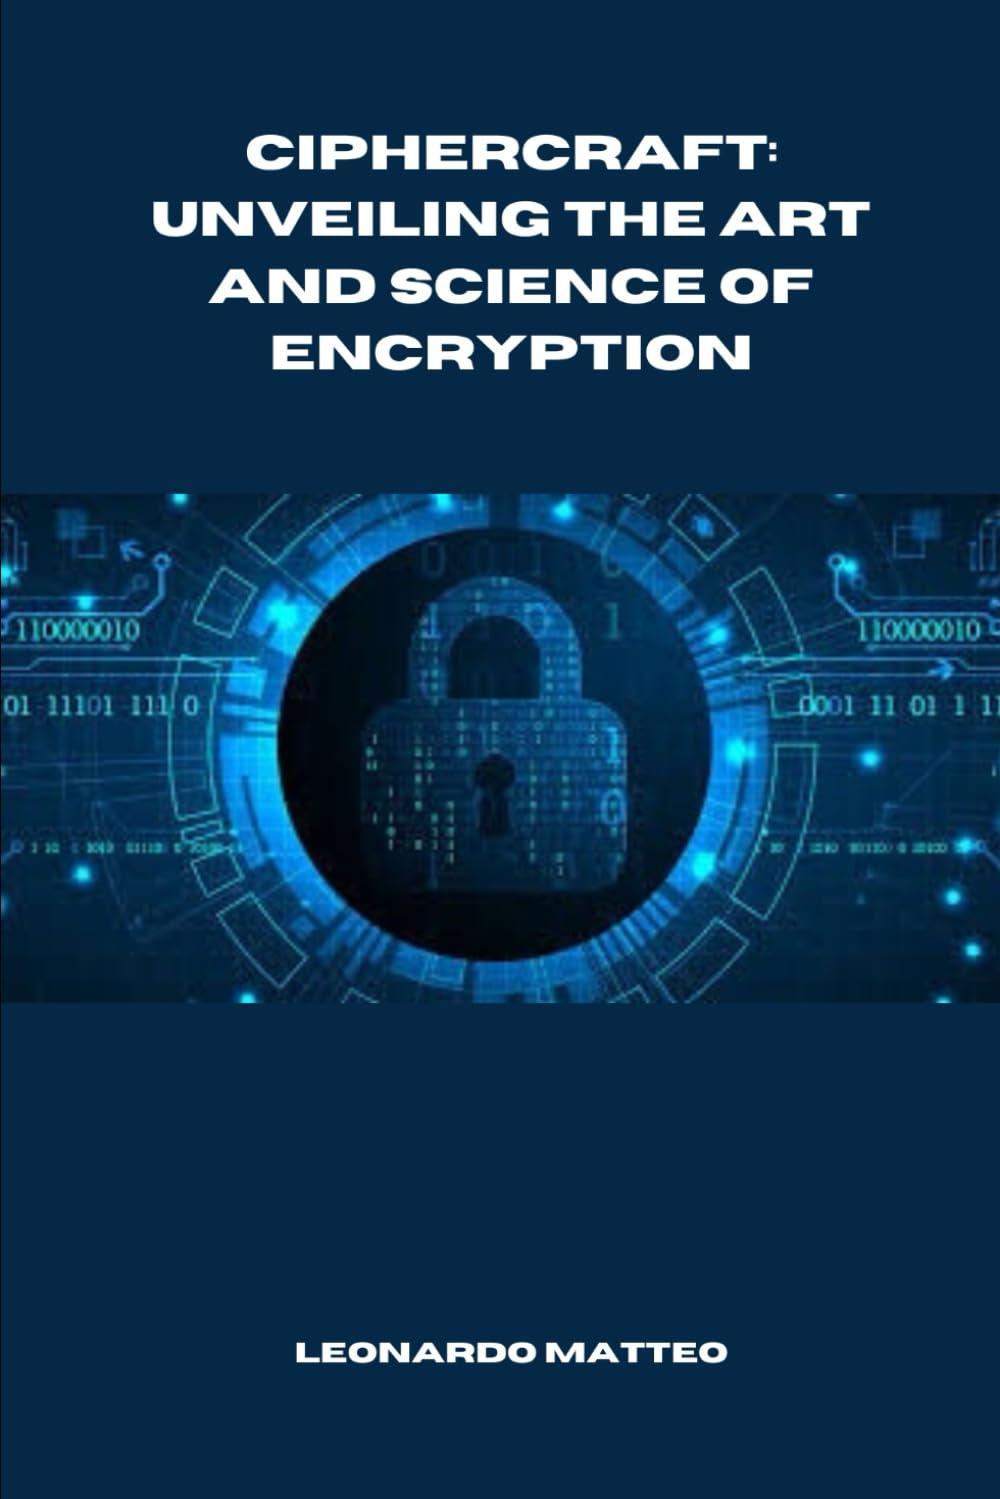 ciphercraft unveiling the art and science of encryption 1st edition leonardo matteo b0ck3qr27t, 979-8862910711